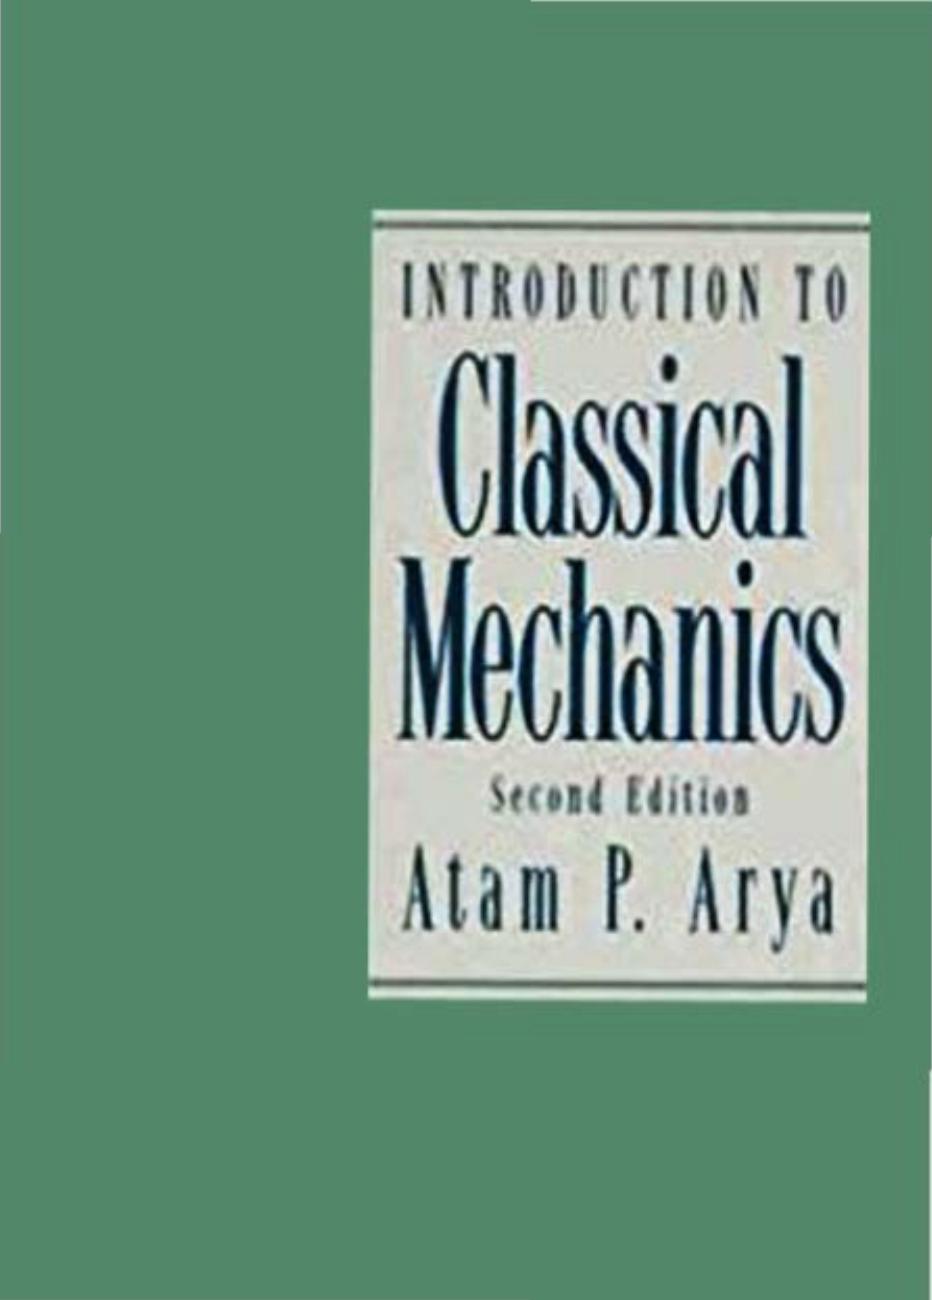 Introduction to Classical Mechanics ( PDFDrive.com )